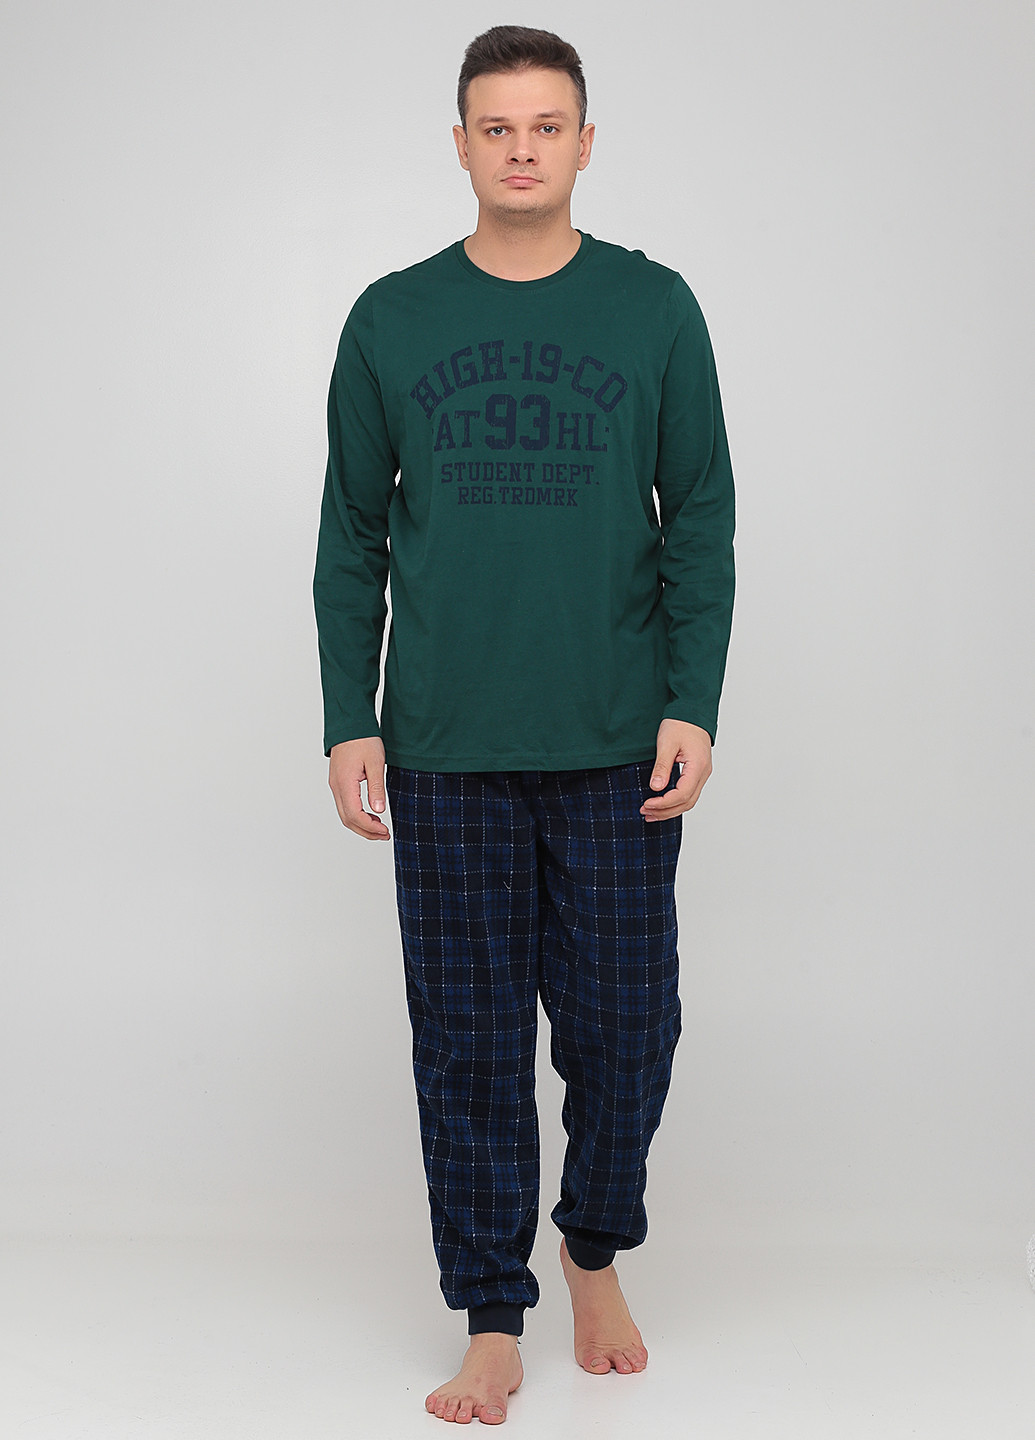 Пижама (лонгслив, брюки) Livergy лонгслив + брюки надпись зелёная домашняя полиэстер, хлопок, флис, трикотаж